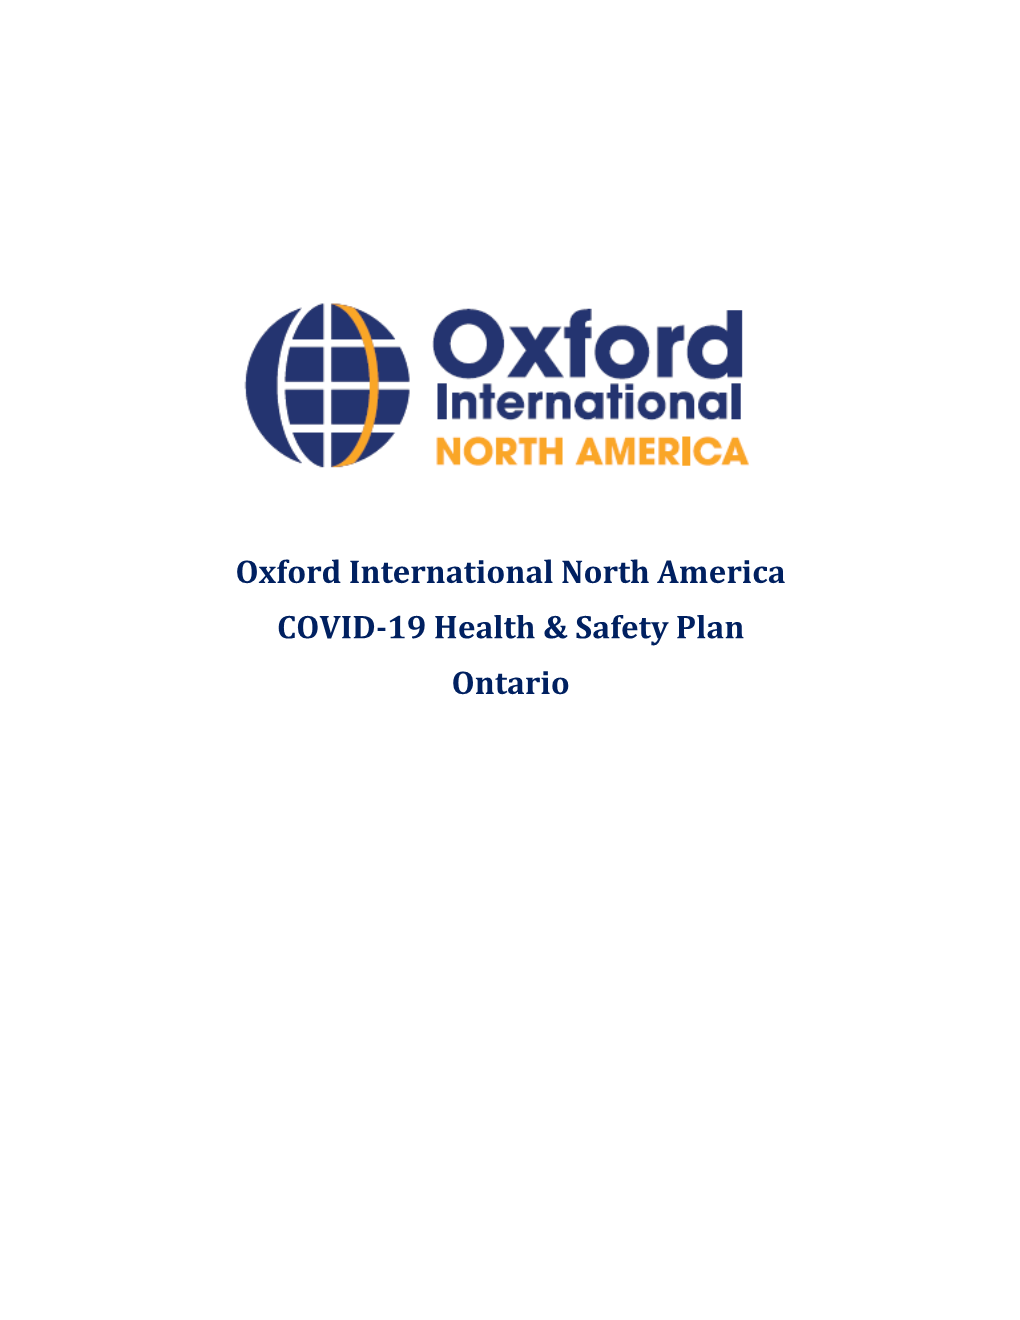 Oxford International North America COVID-19 Health & Safety Plan Ontario